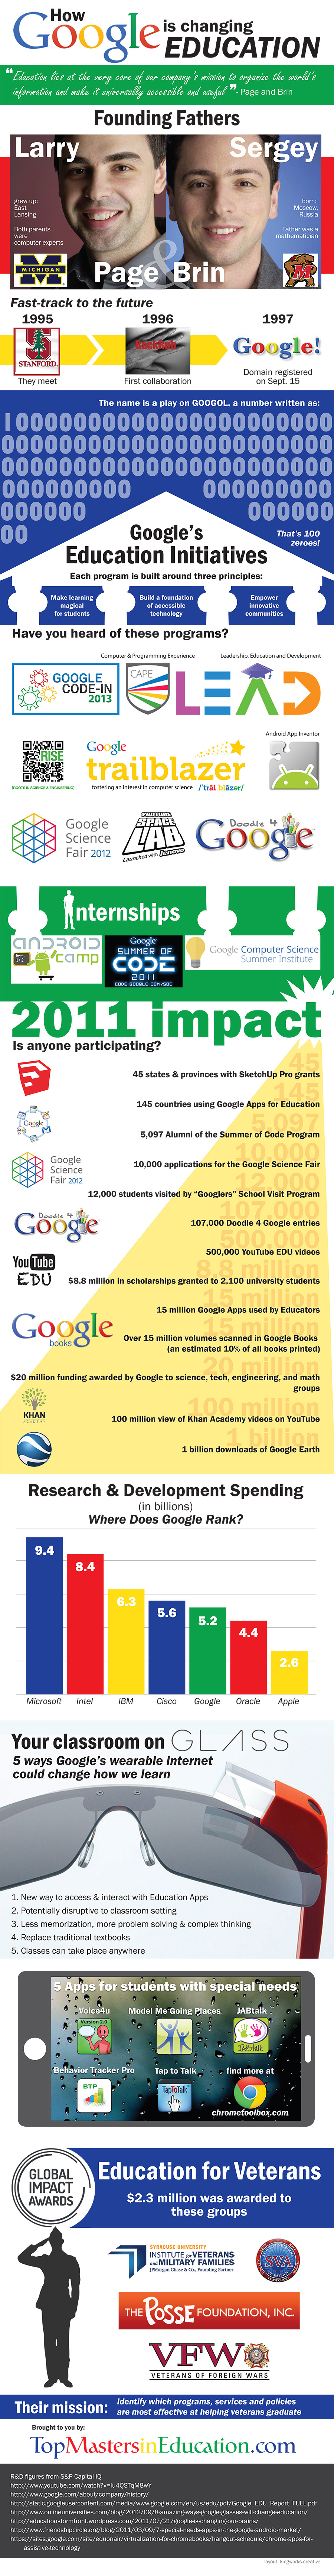 google_education_900